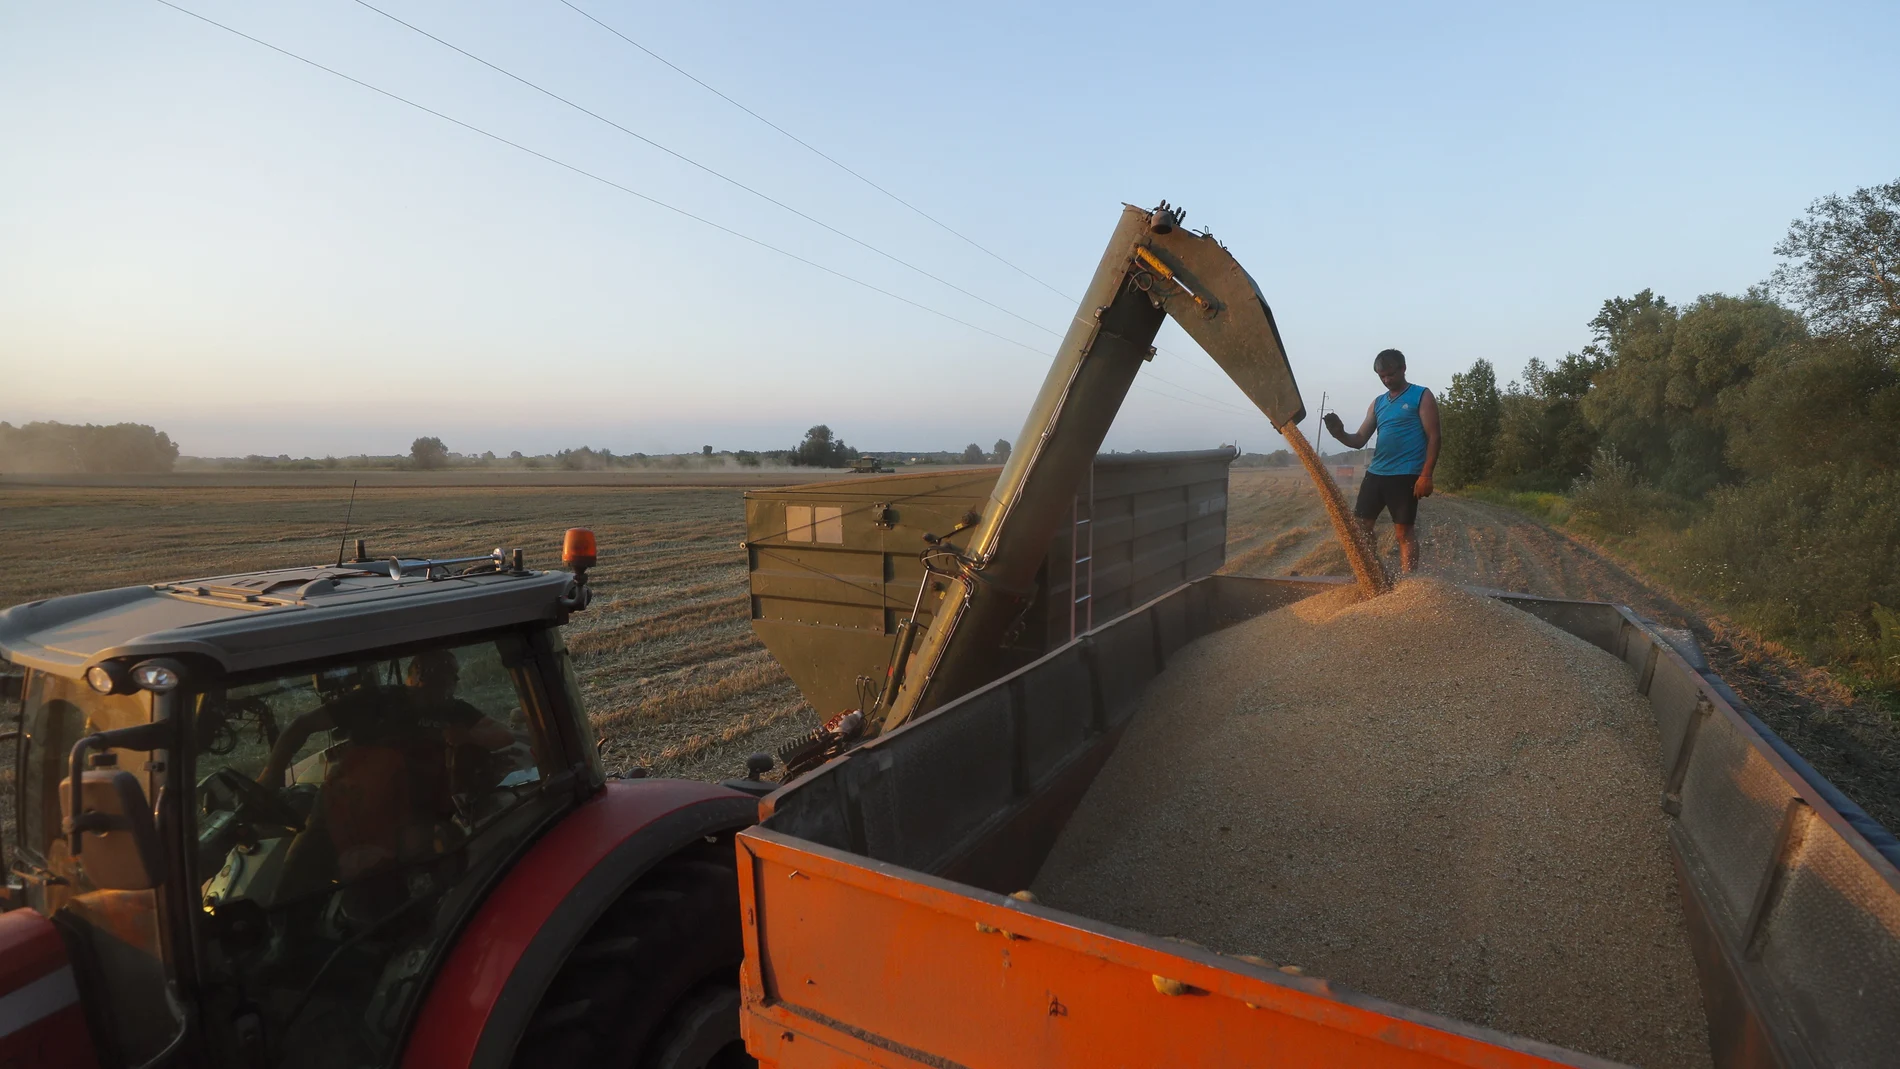 A farmer watches as a combined harvester pours grain onto a truck in a field near Kyiv (Kiev), Ukraine.